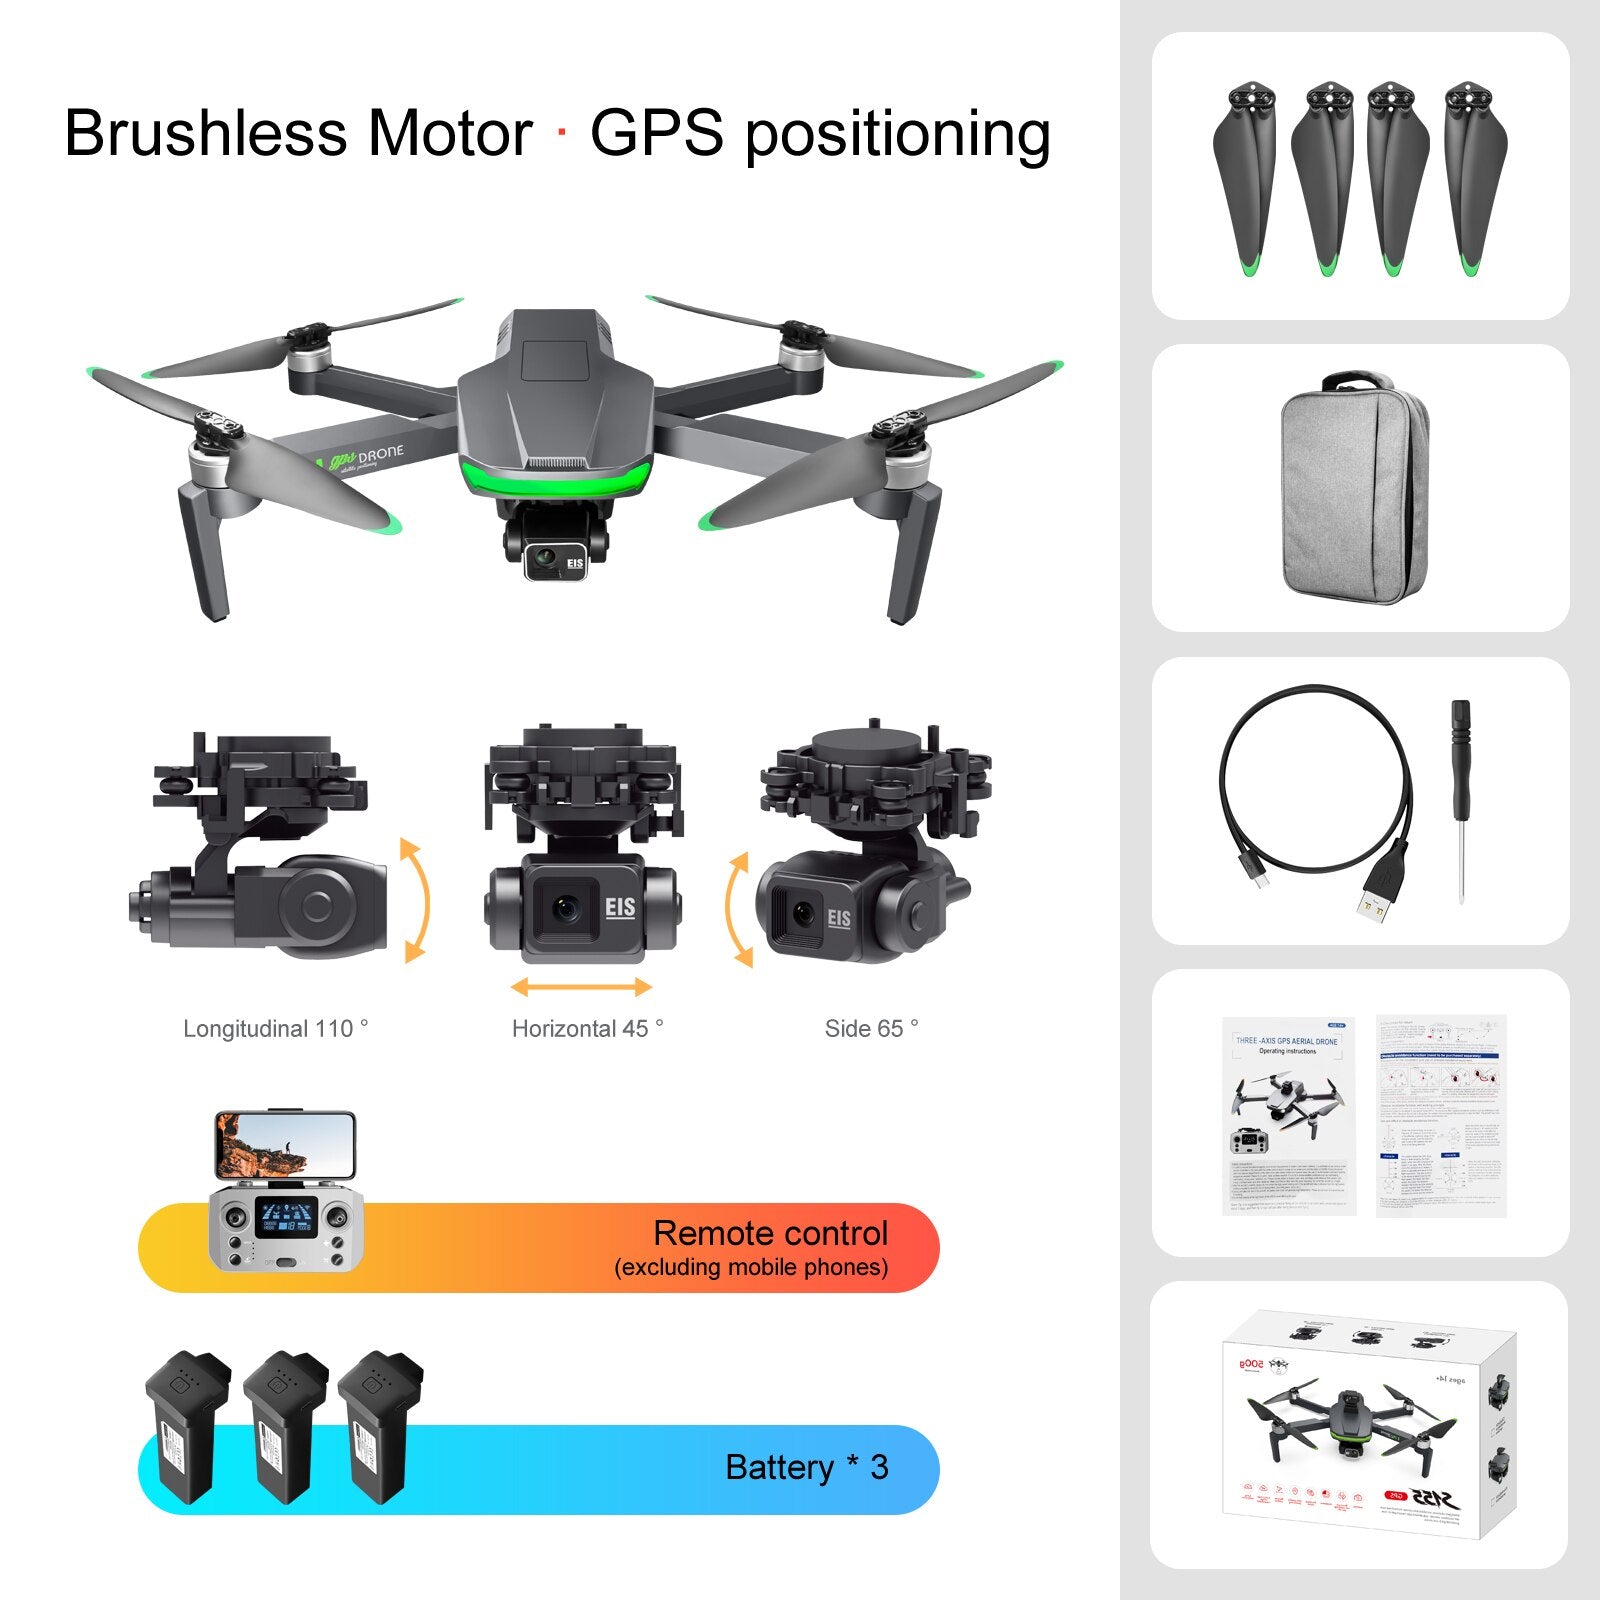 S155 Pro GPS Drone, Brushless Motor GPS positioning 0 EIS EIS Longitu